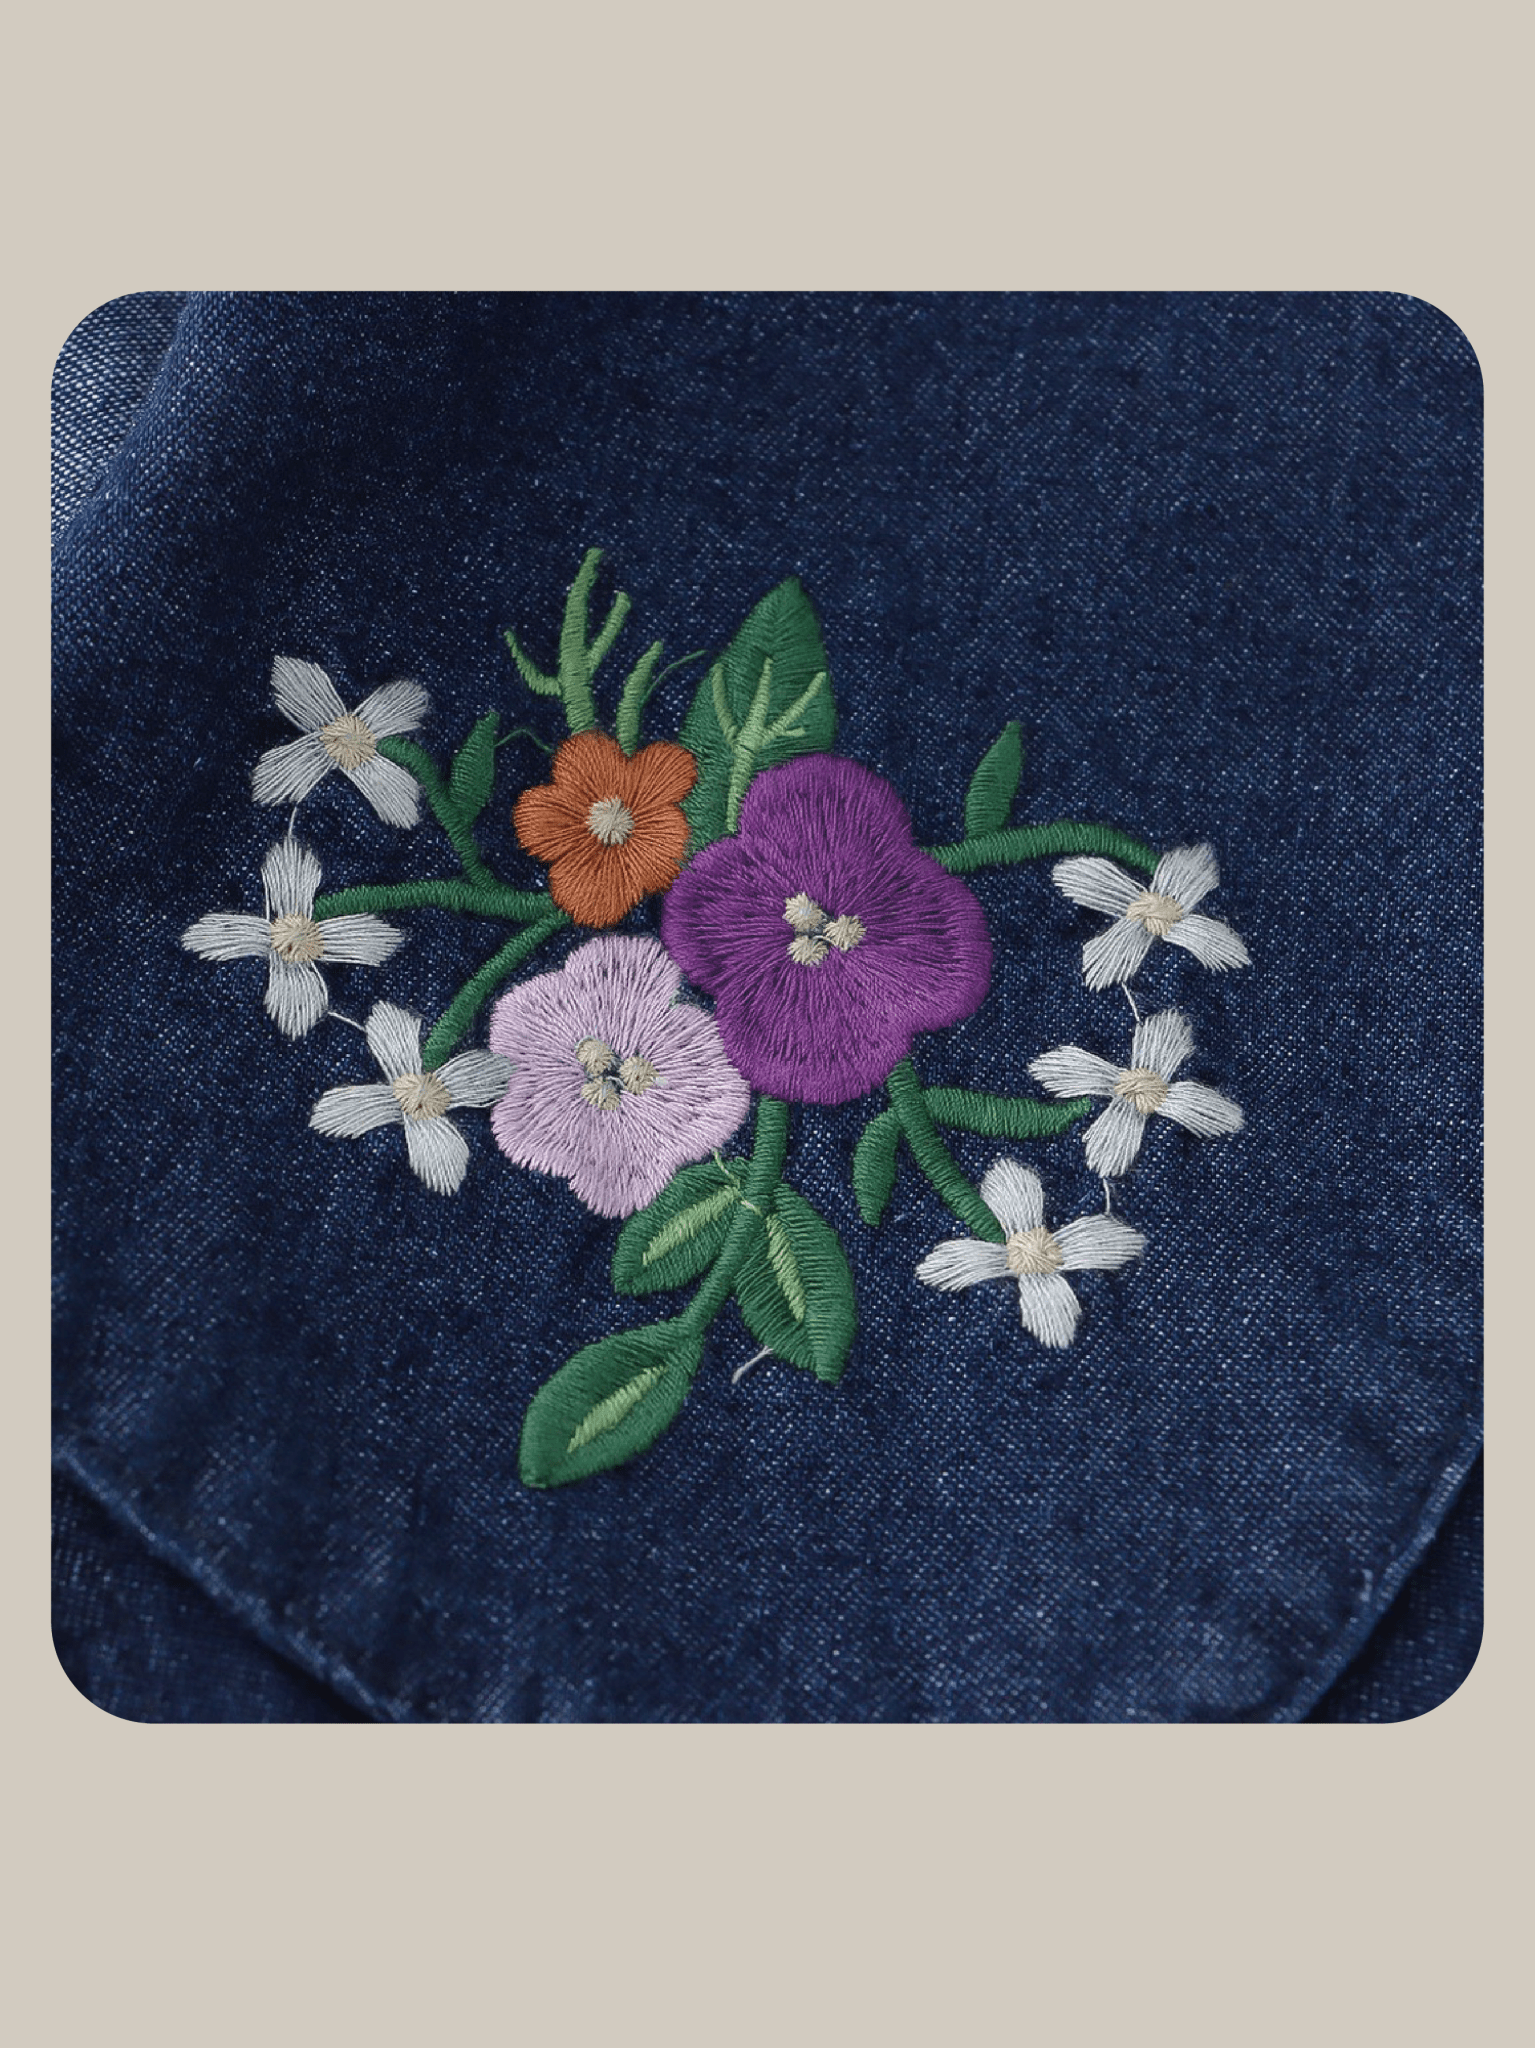 Embroidery Baby Collar Denim Vest - LOVE POMME POMME